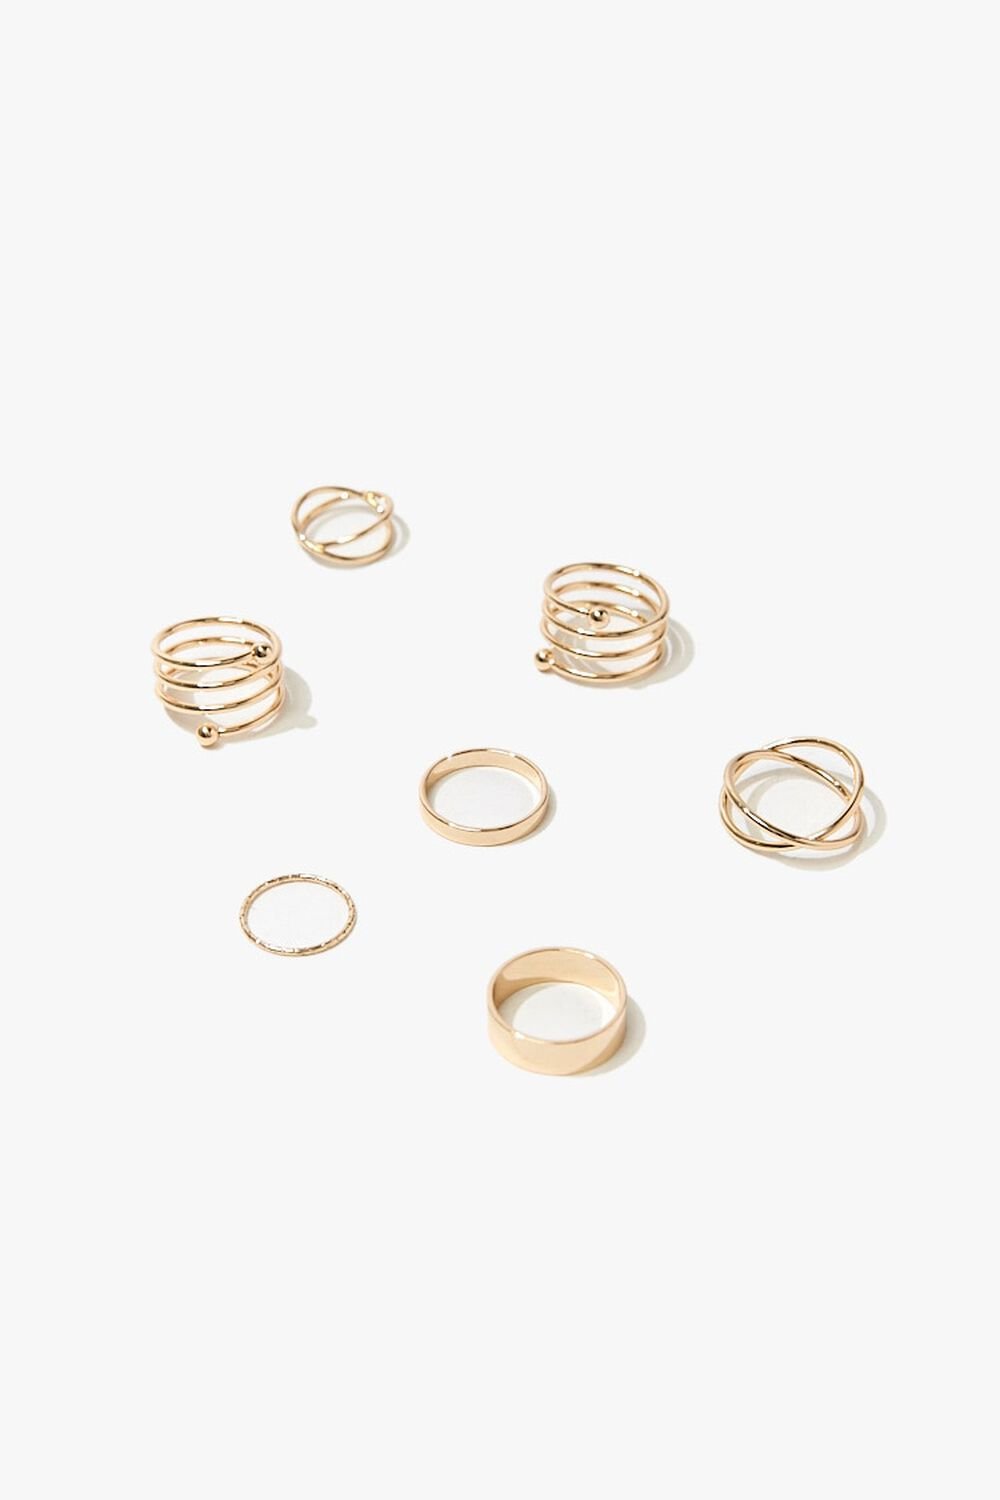 GOLD Assorted Ring Set, image 1